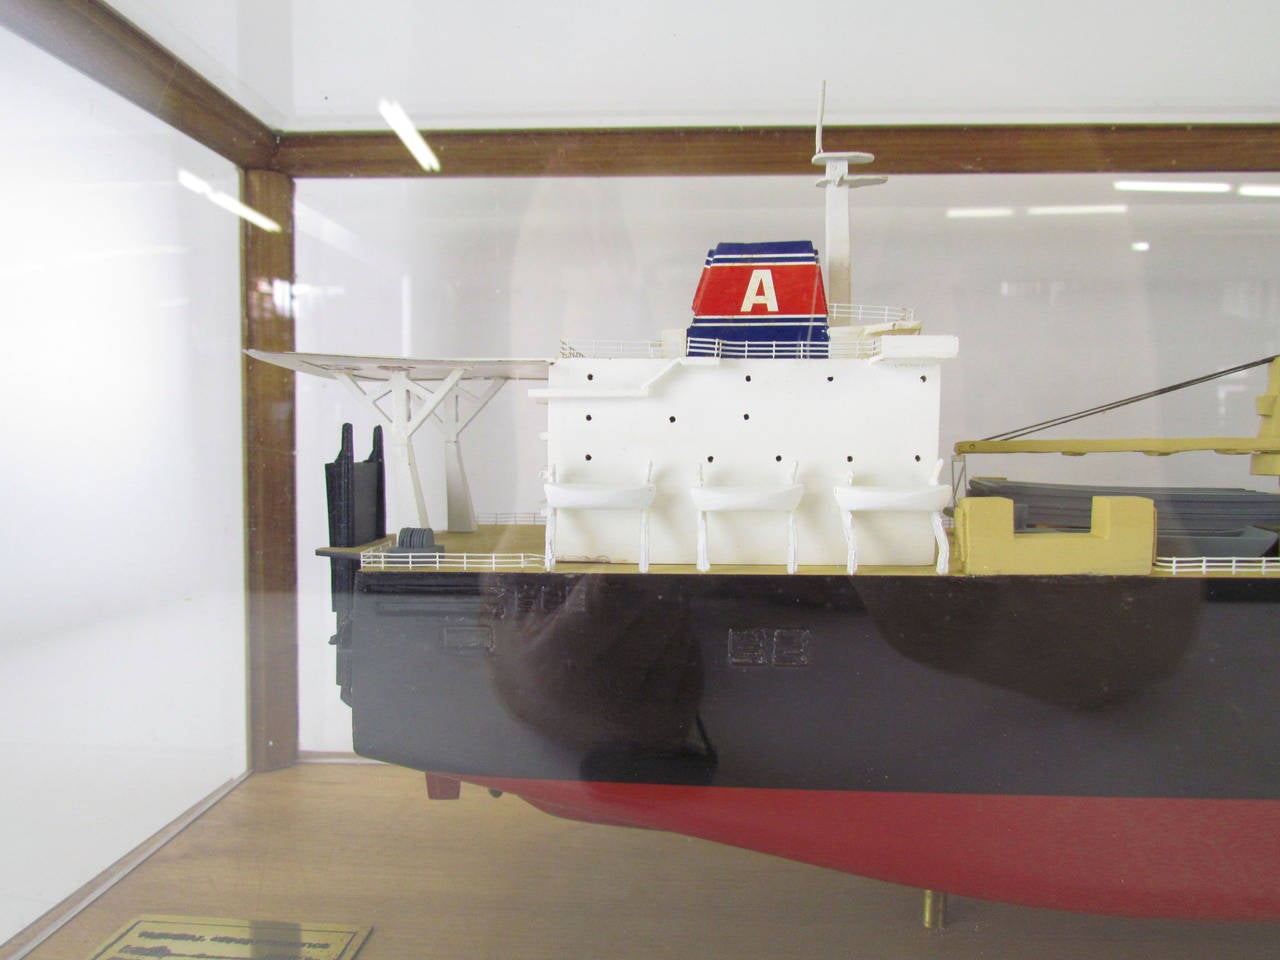 Other Executive Presentation Military Ship Model in Display Case, circa 1980s